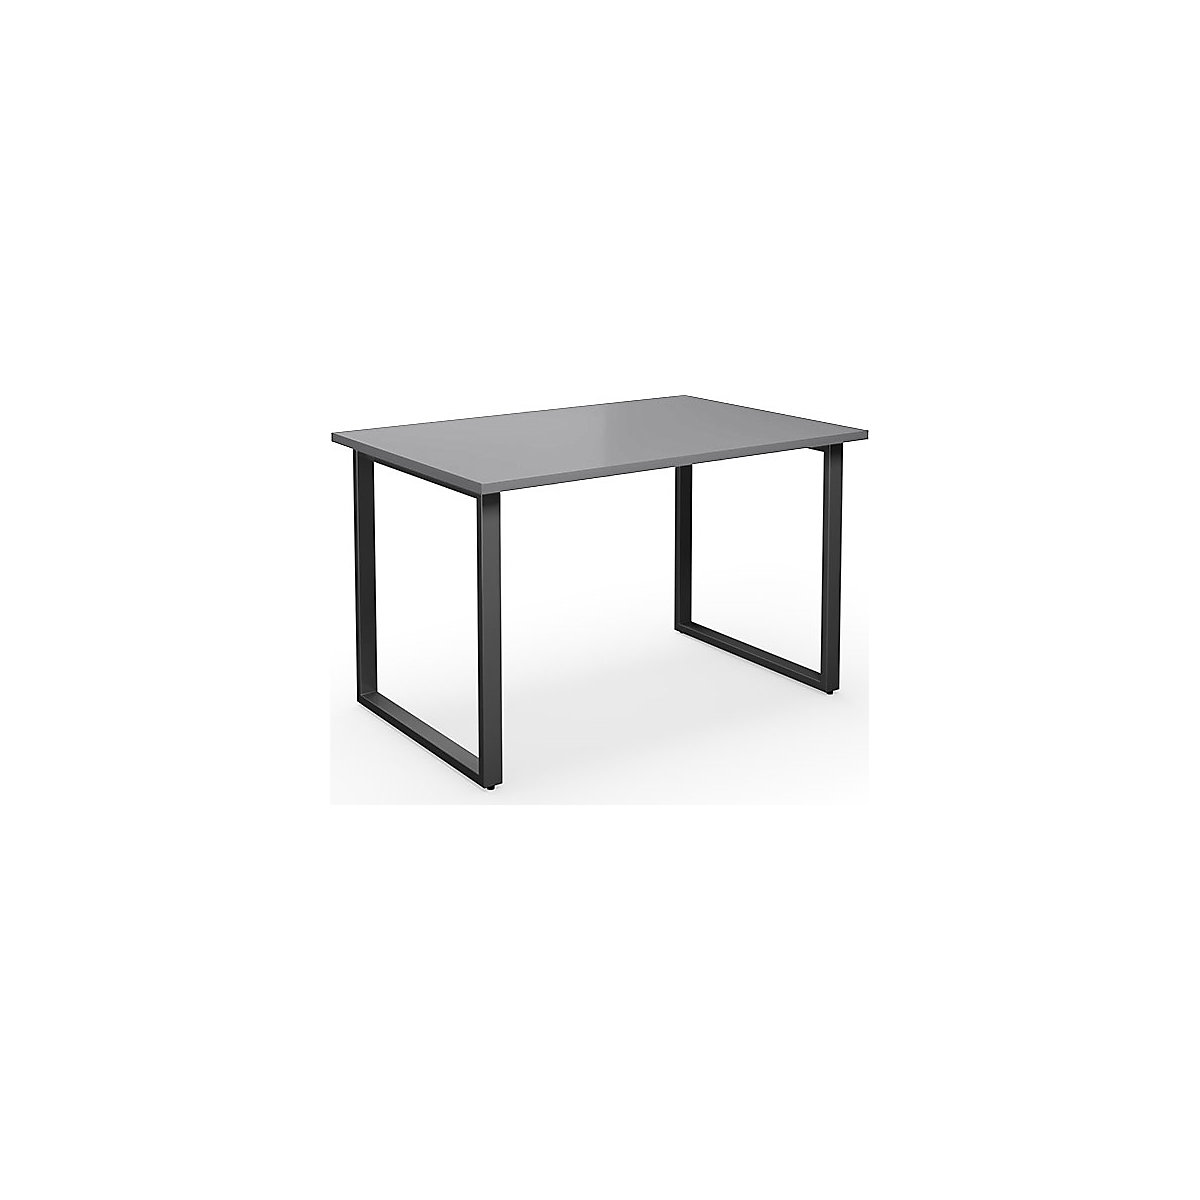 DUO-O multi-purpose desk, straight tabletop, WxD 1200 x 800 mm, light grey, black-4